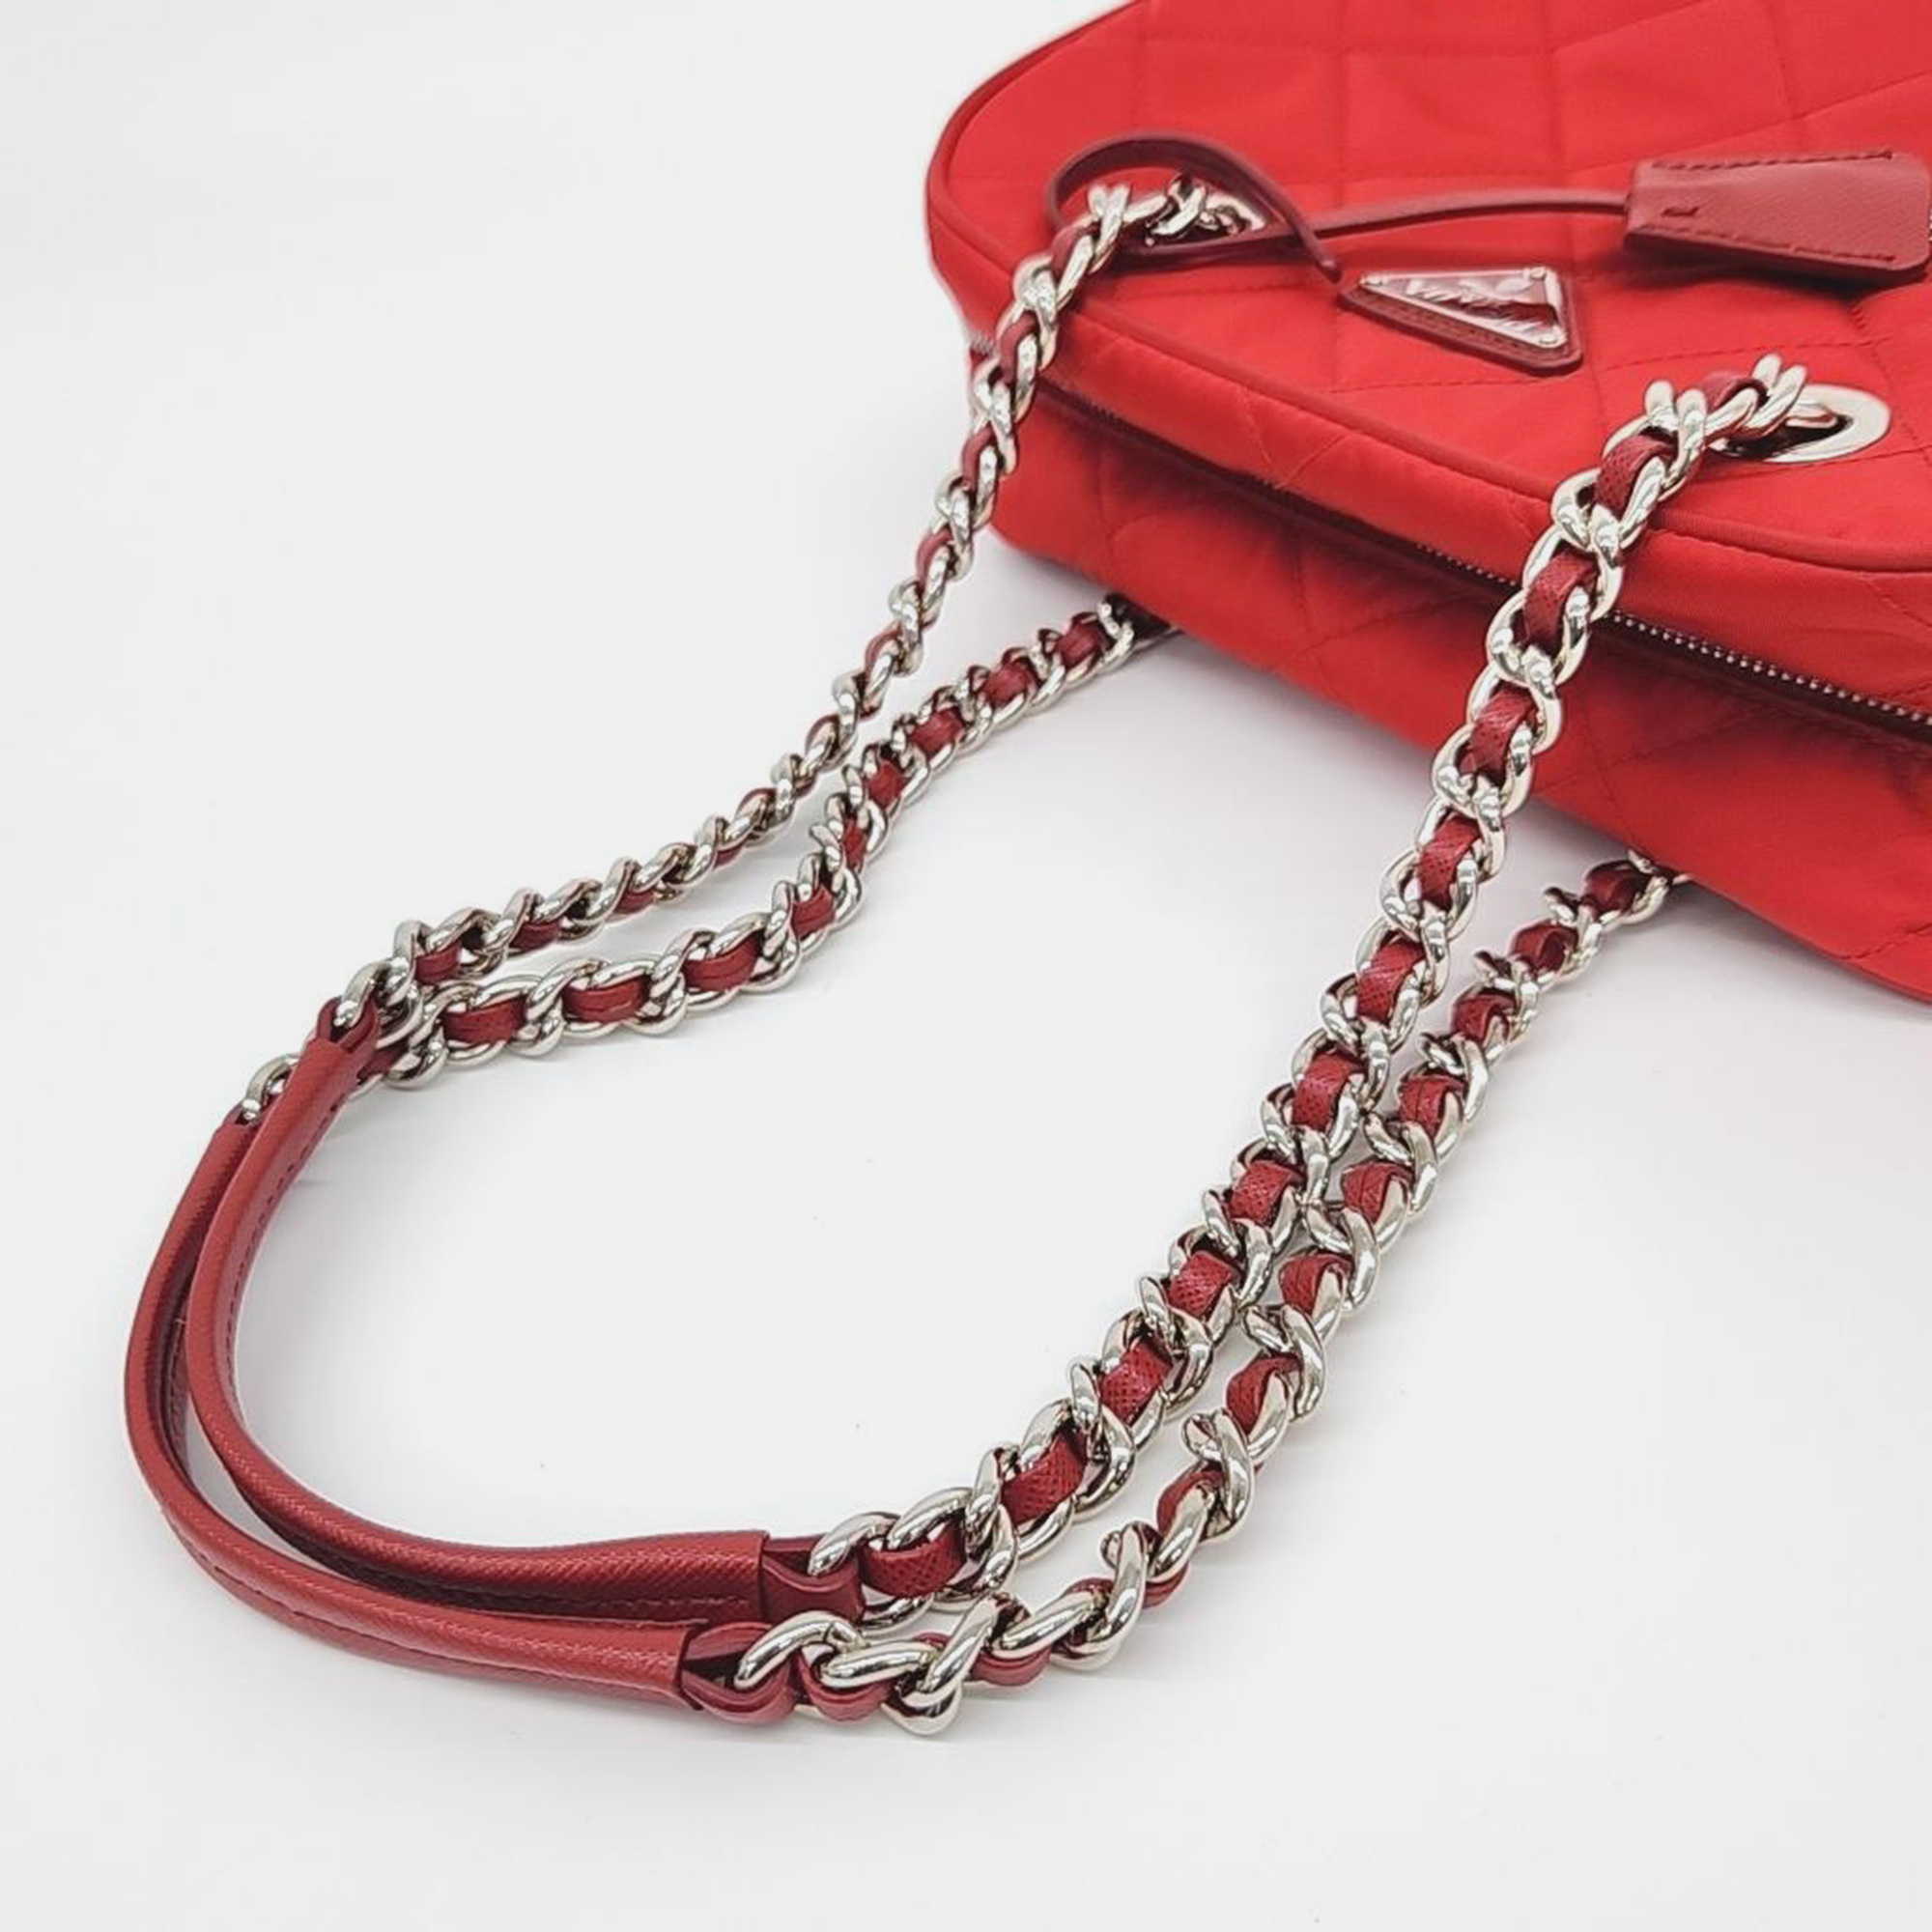 Prada Fabric Chain Shoulder Bag